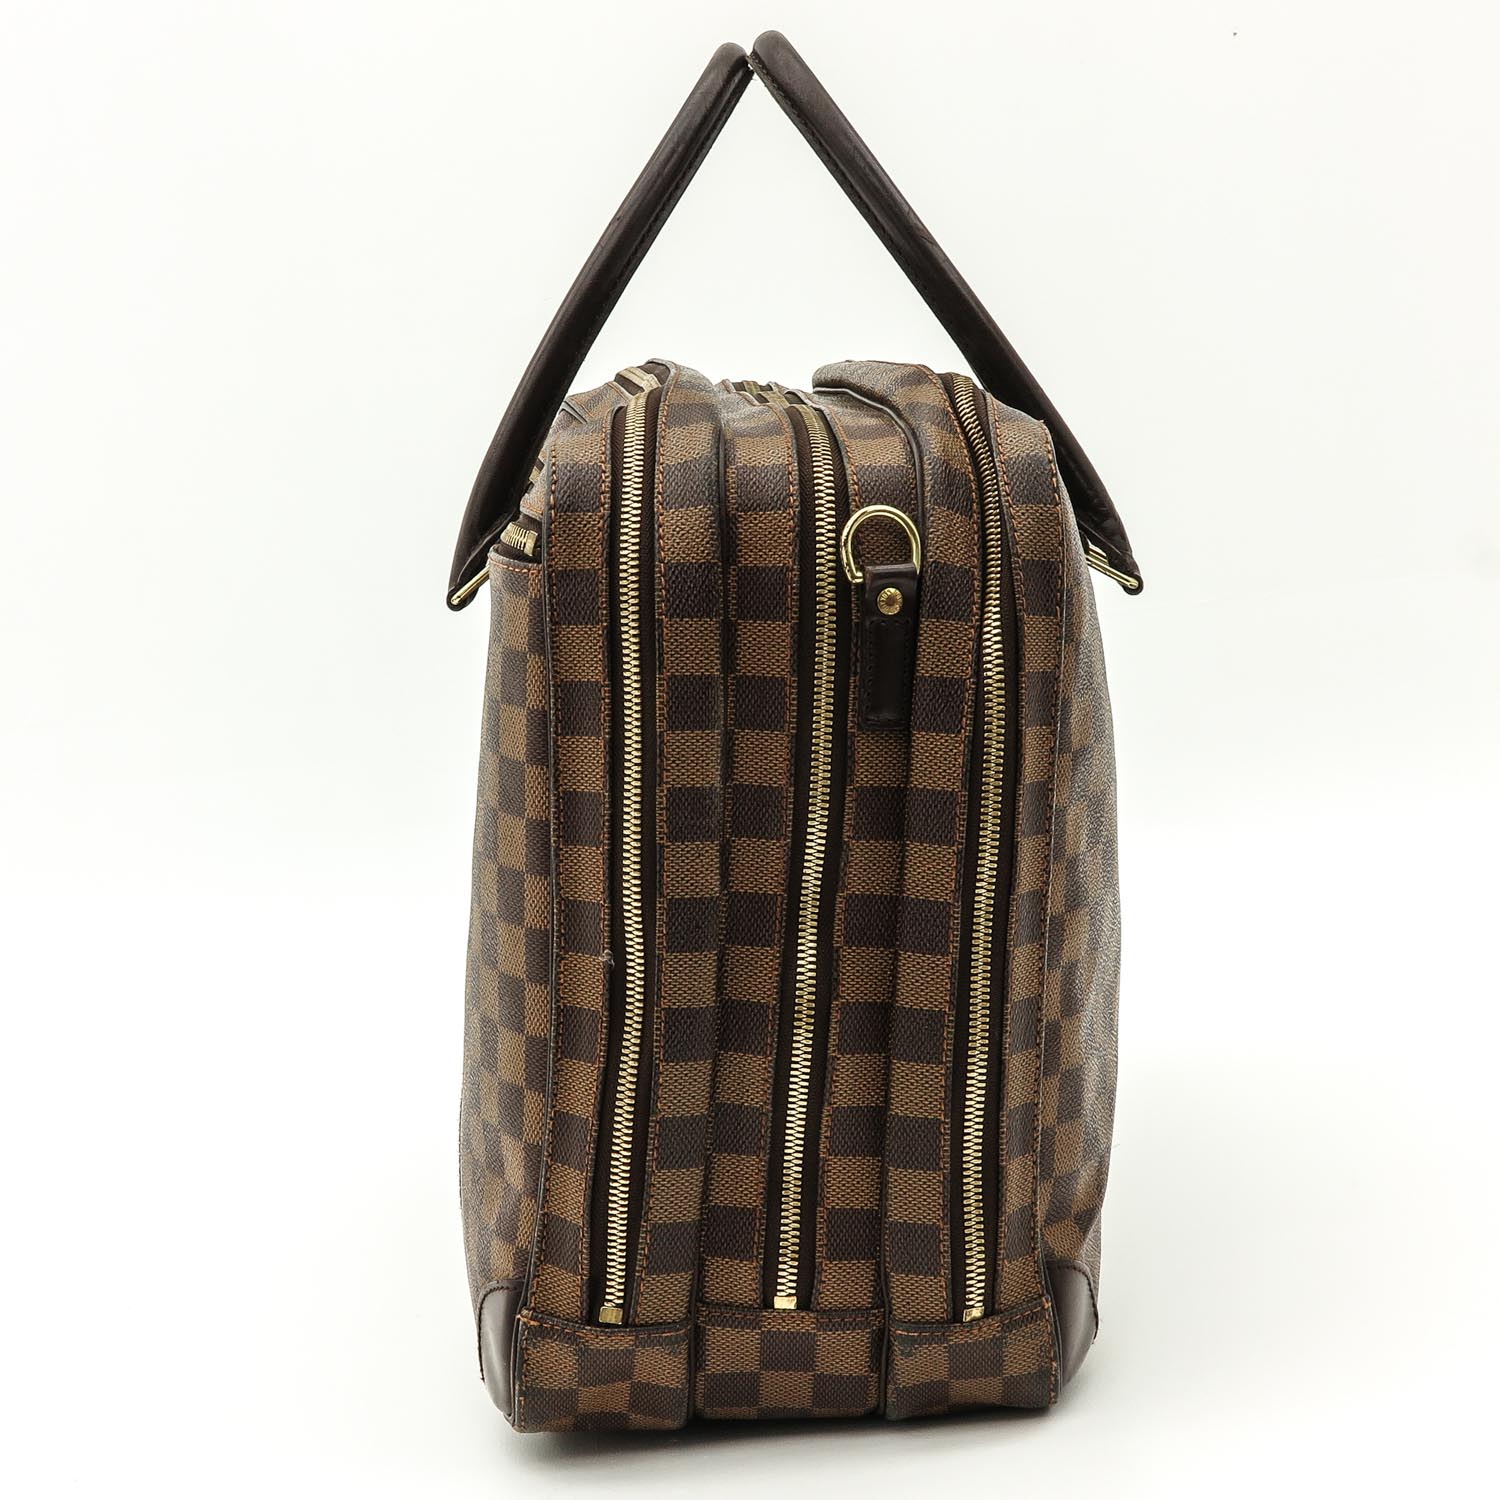 A Custom Made Louis Vuitton Travel Bag - Image 2 of 8